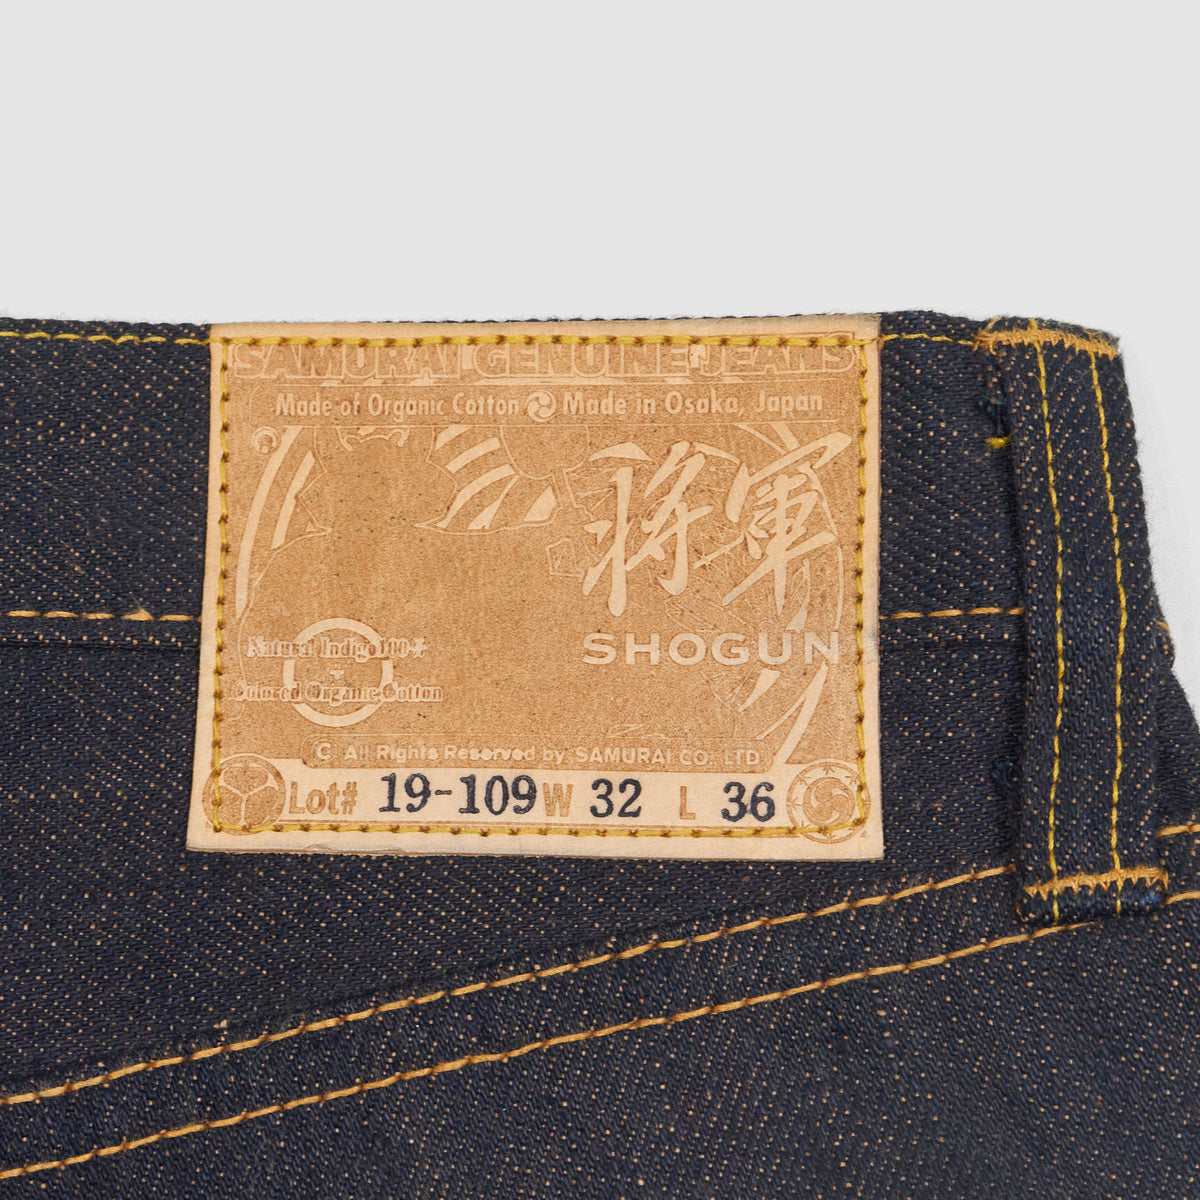 Samurai Jeans Organic Brown Weft Denim Jeans